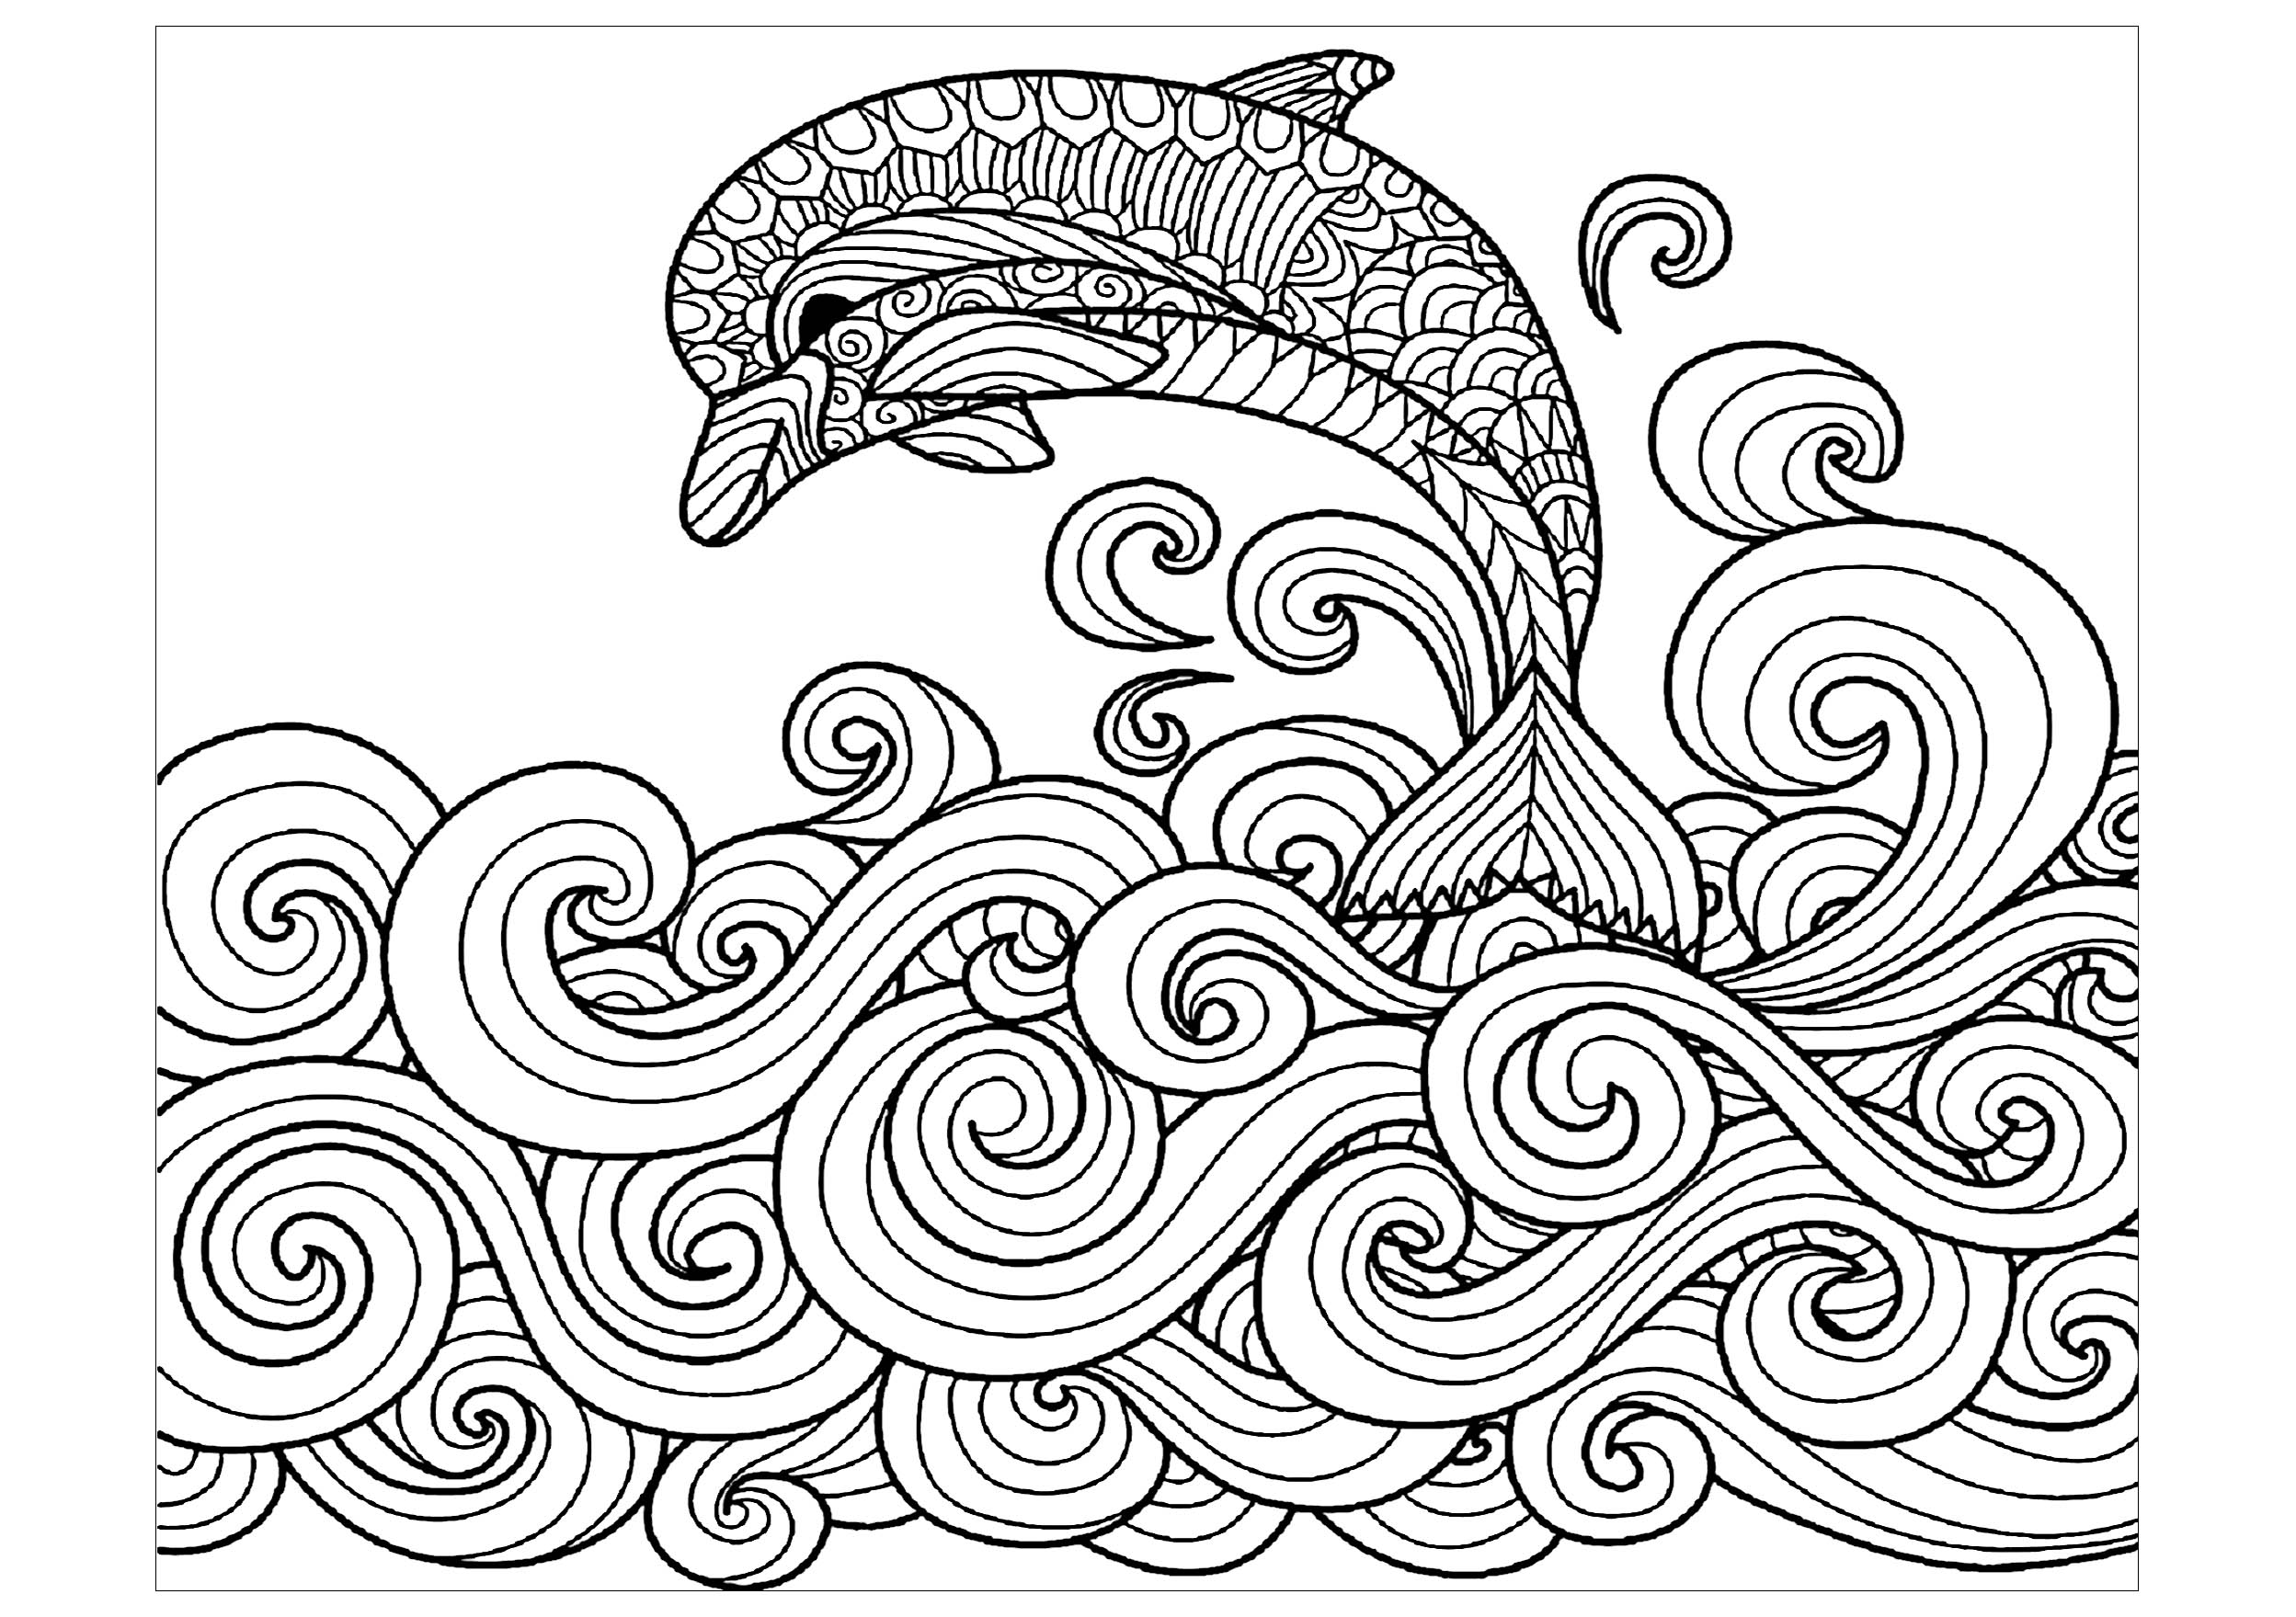 Dolphin with simple waves, Artist : Bimdeedee   Source : 123rf